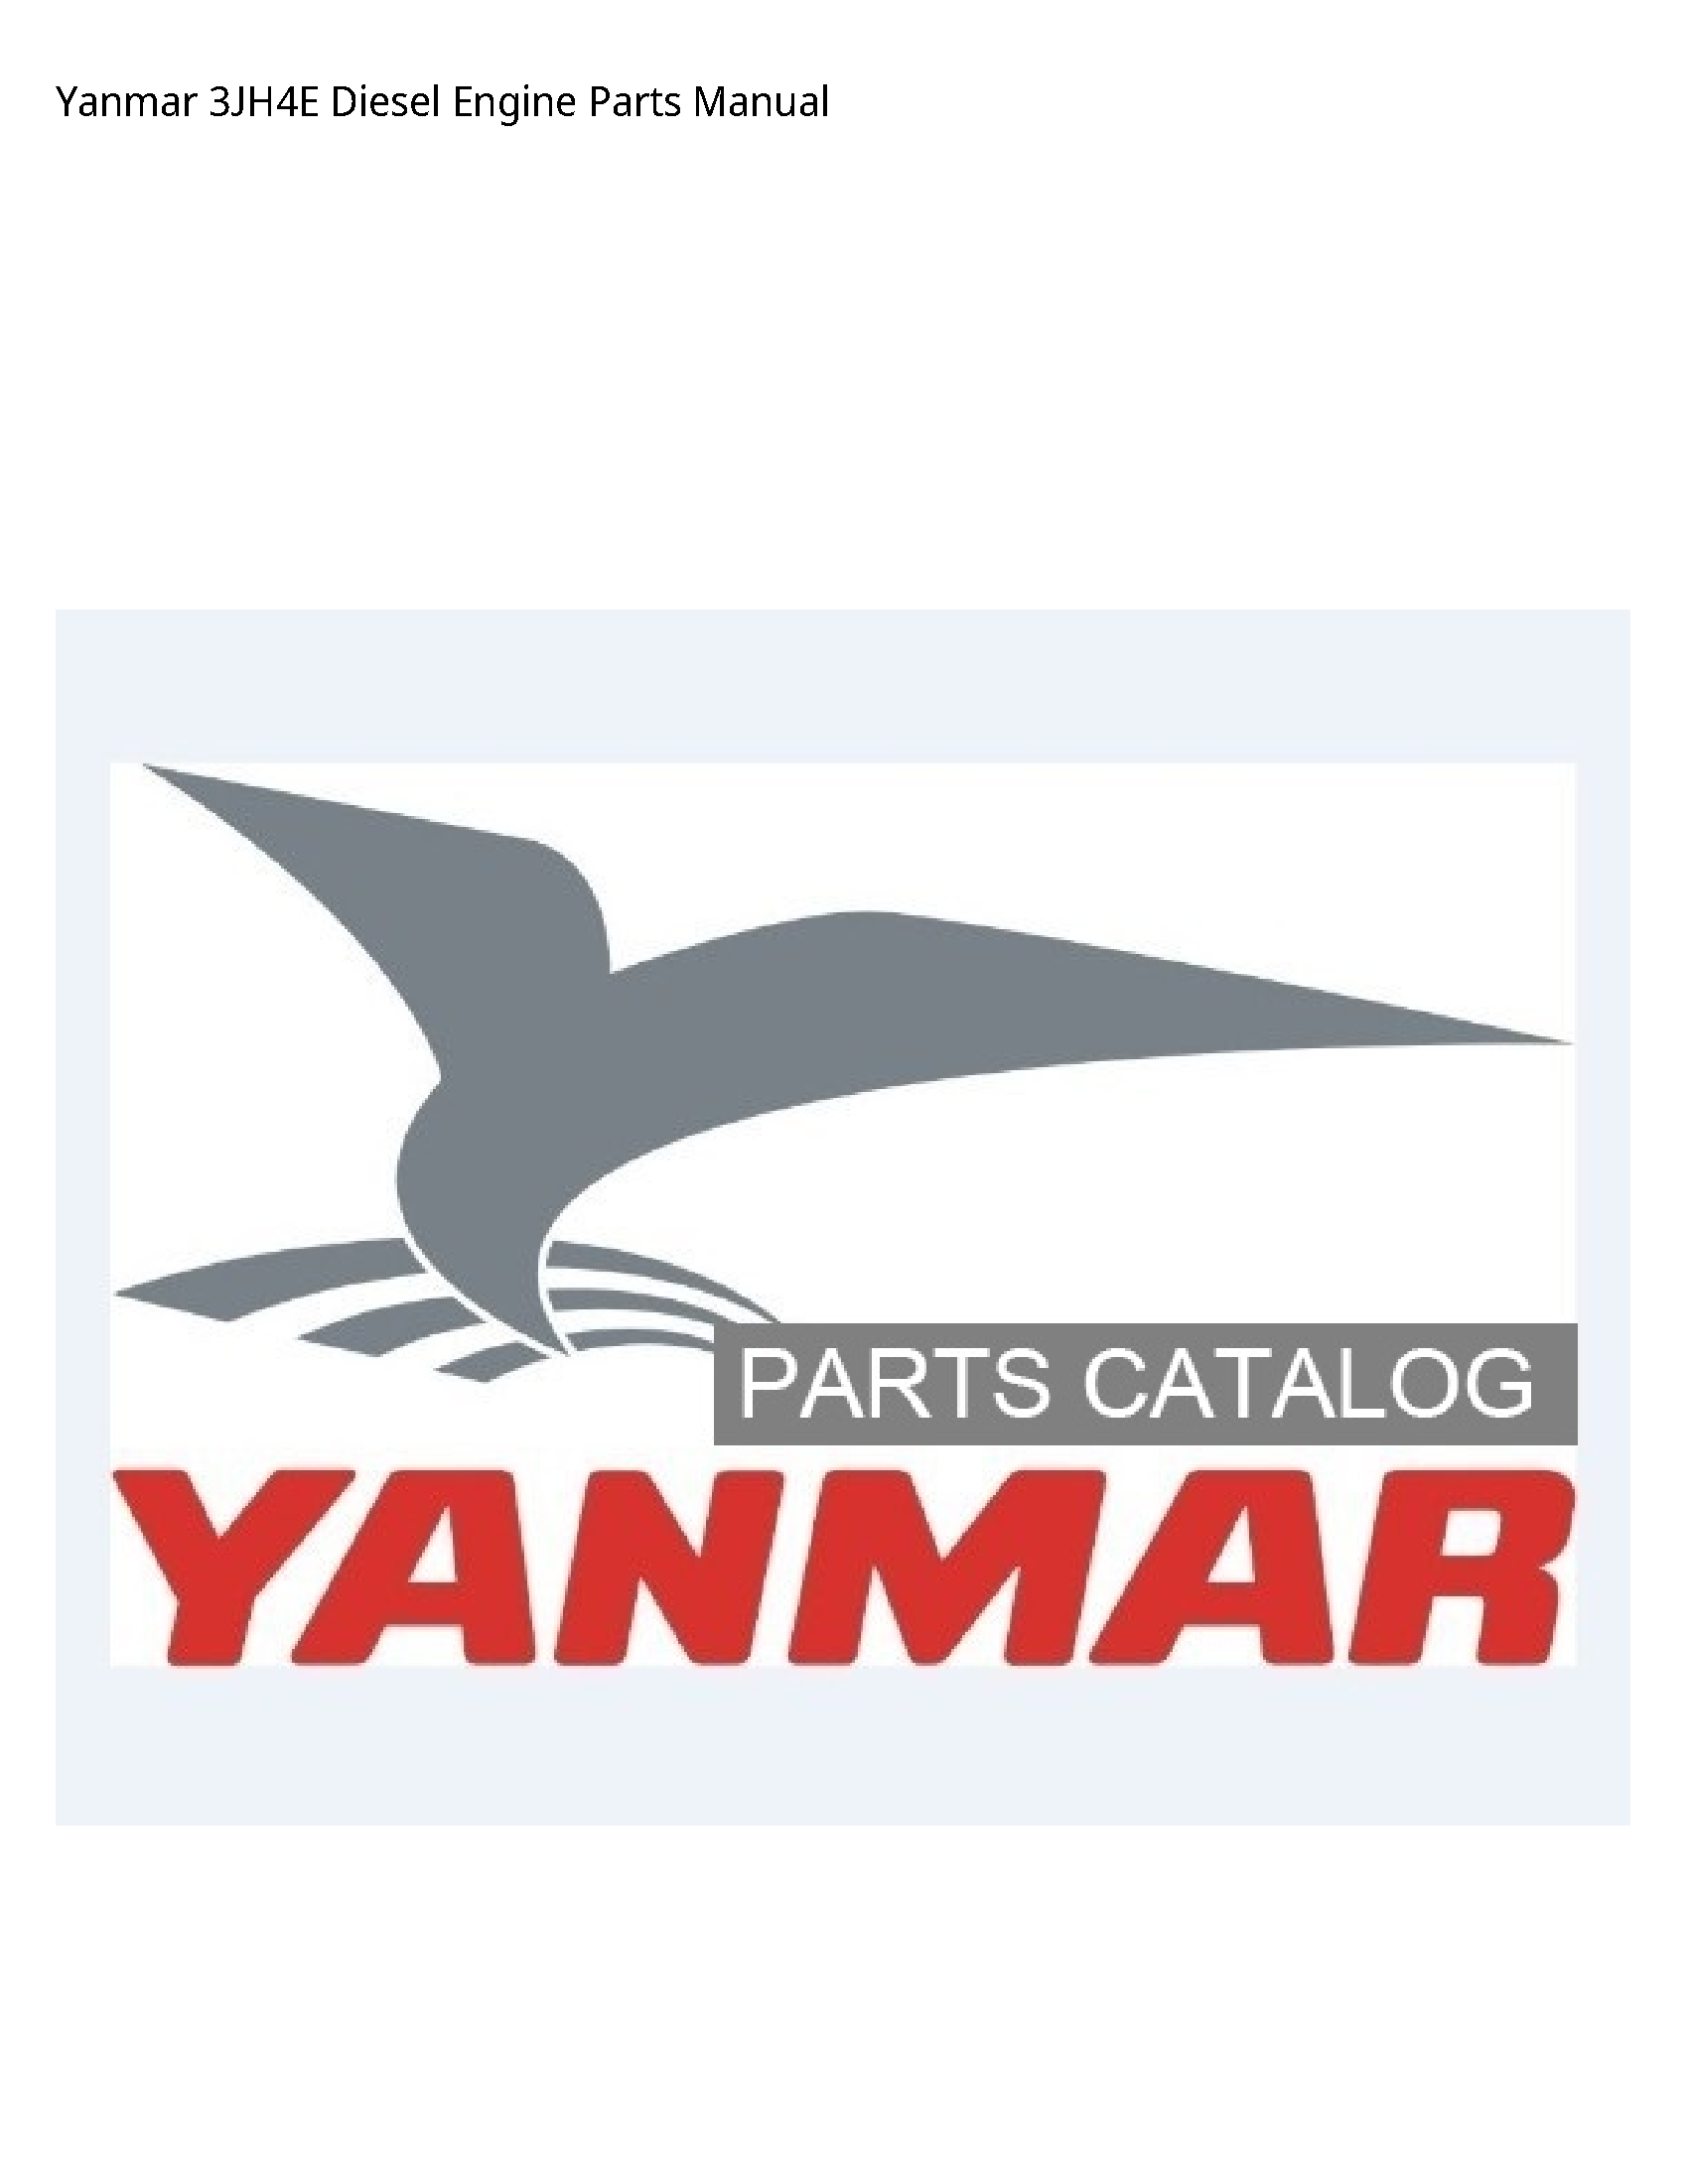 Yanmar 3JH4E Diesel Engine Parts manual